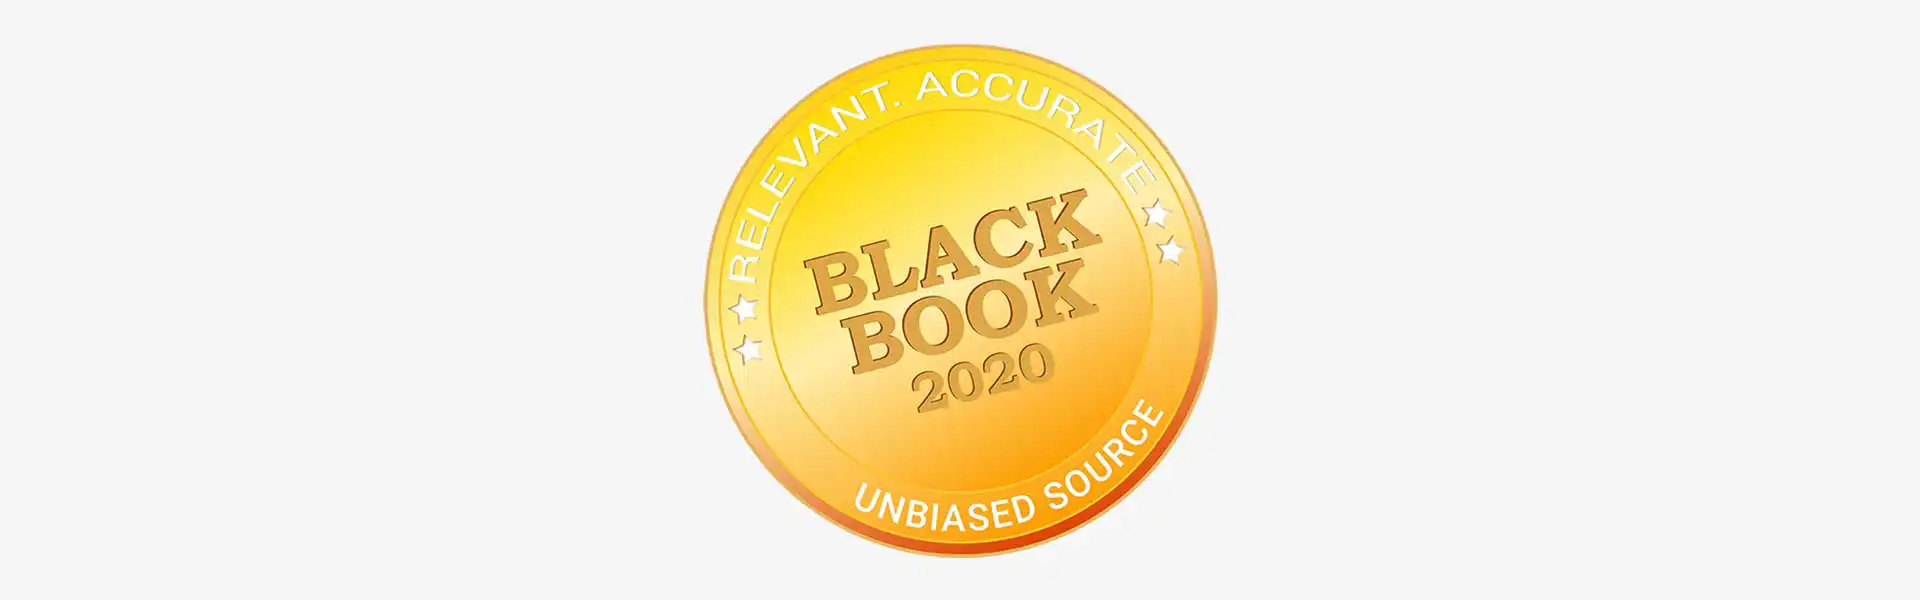 Black-Book-2020